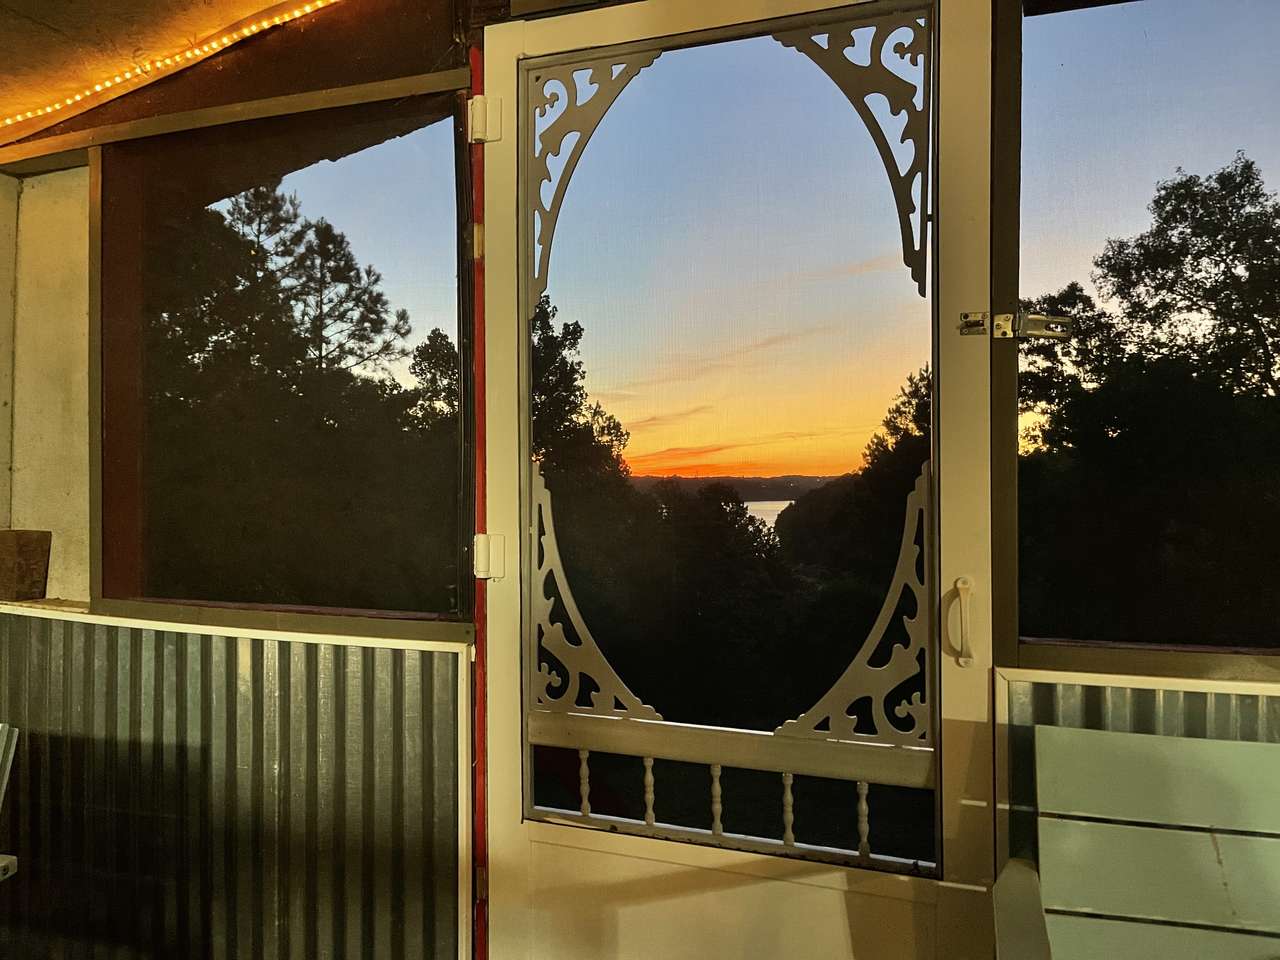 Západ slunce v Ozarks puzzle online z fotografie